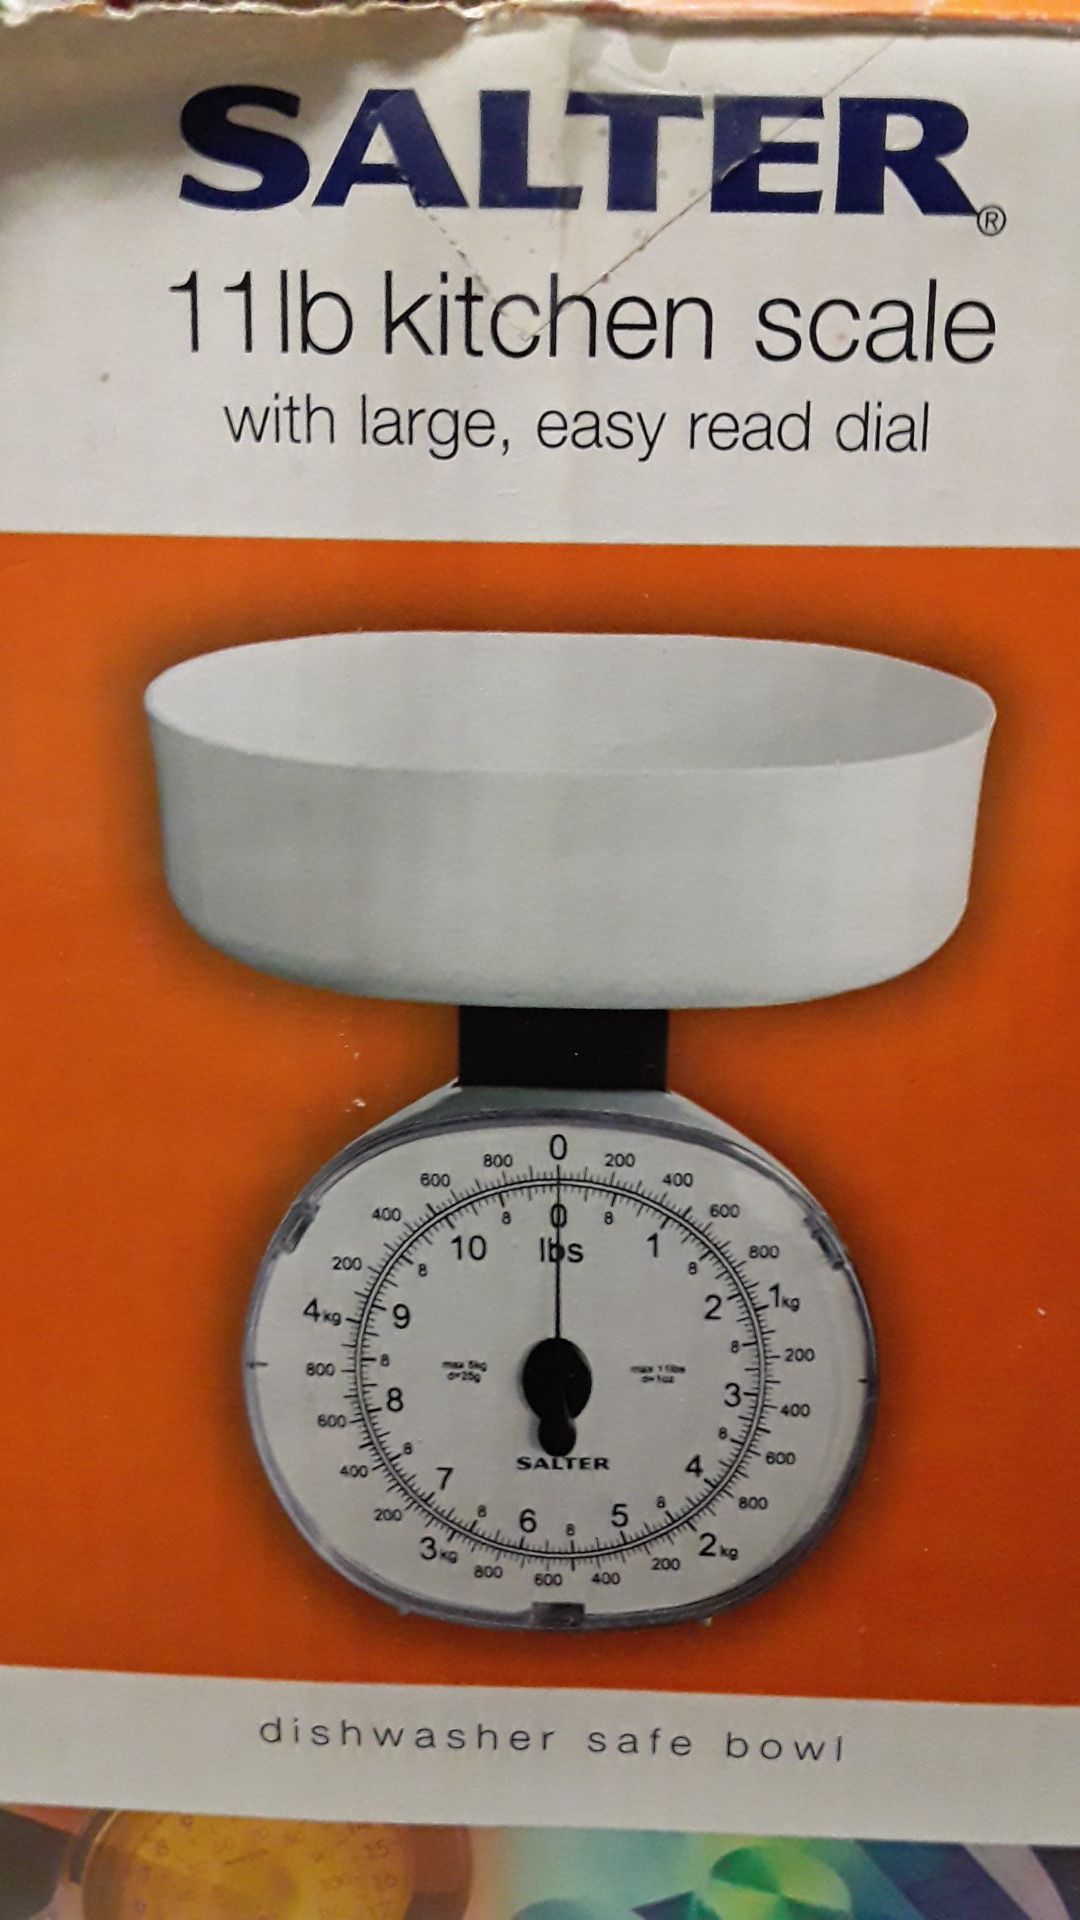 Salter 11lb kitchen scale